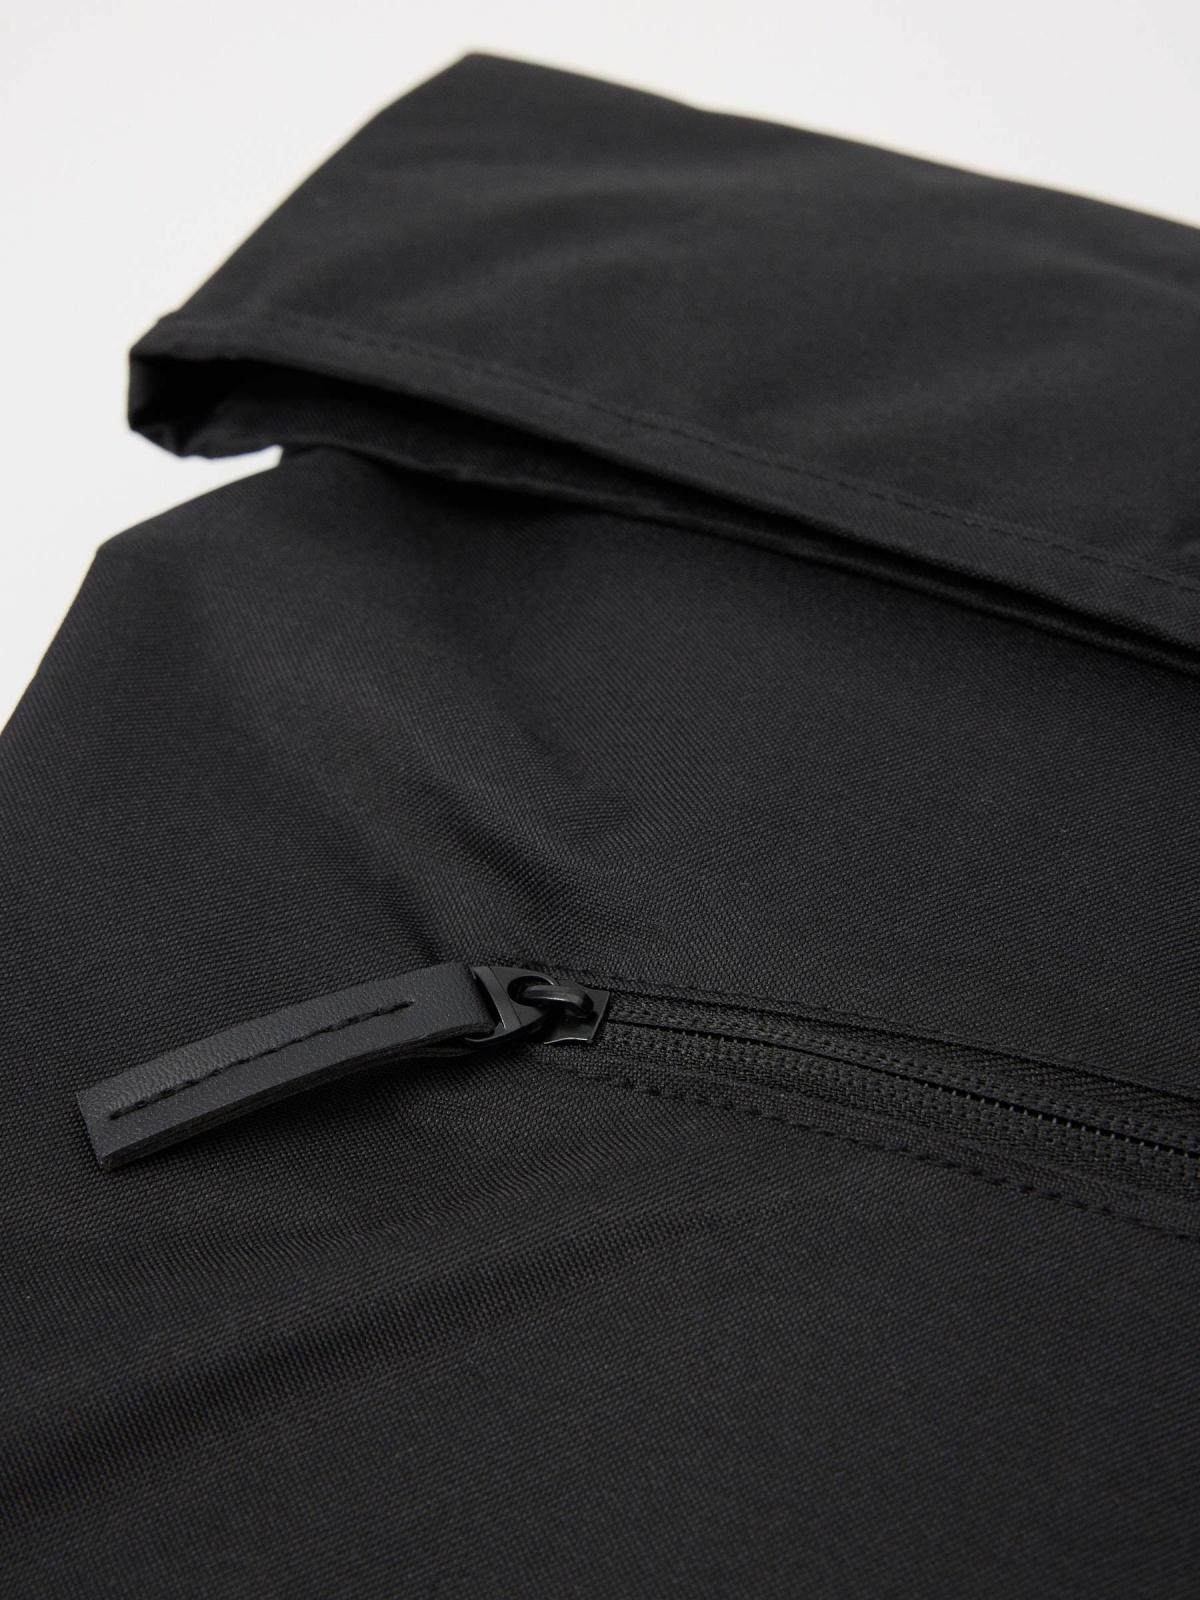 Nylon backpack detail view